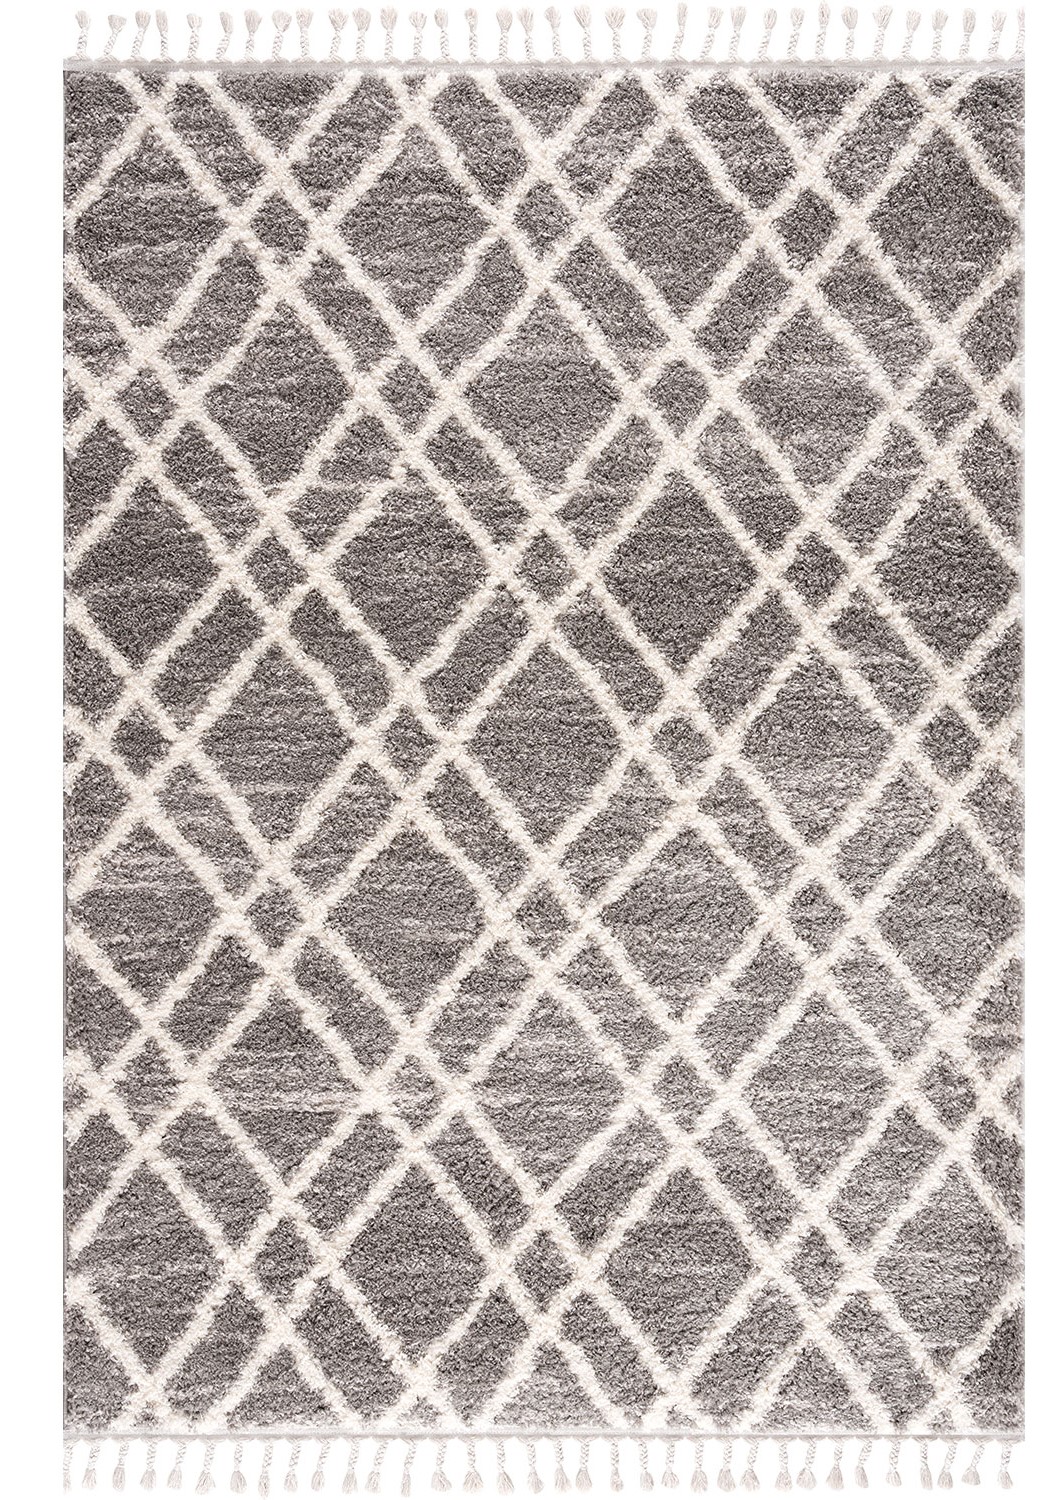 Shaggy rugs - Cotopaxi (grey)